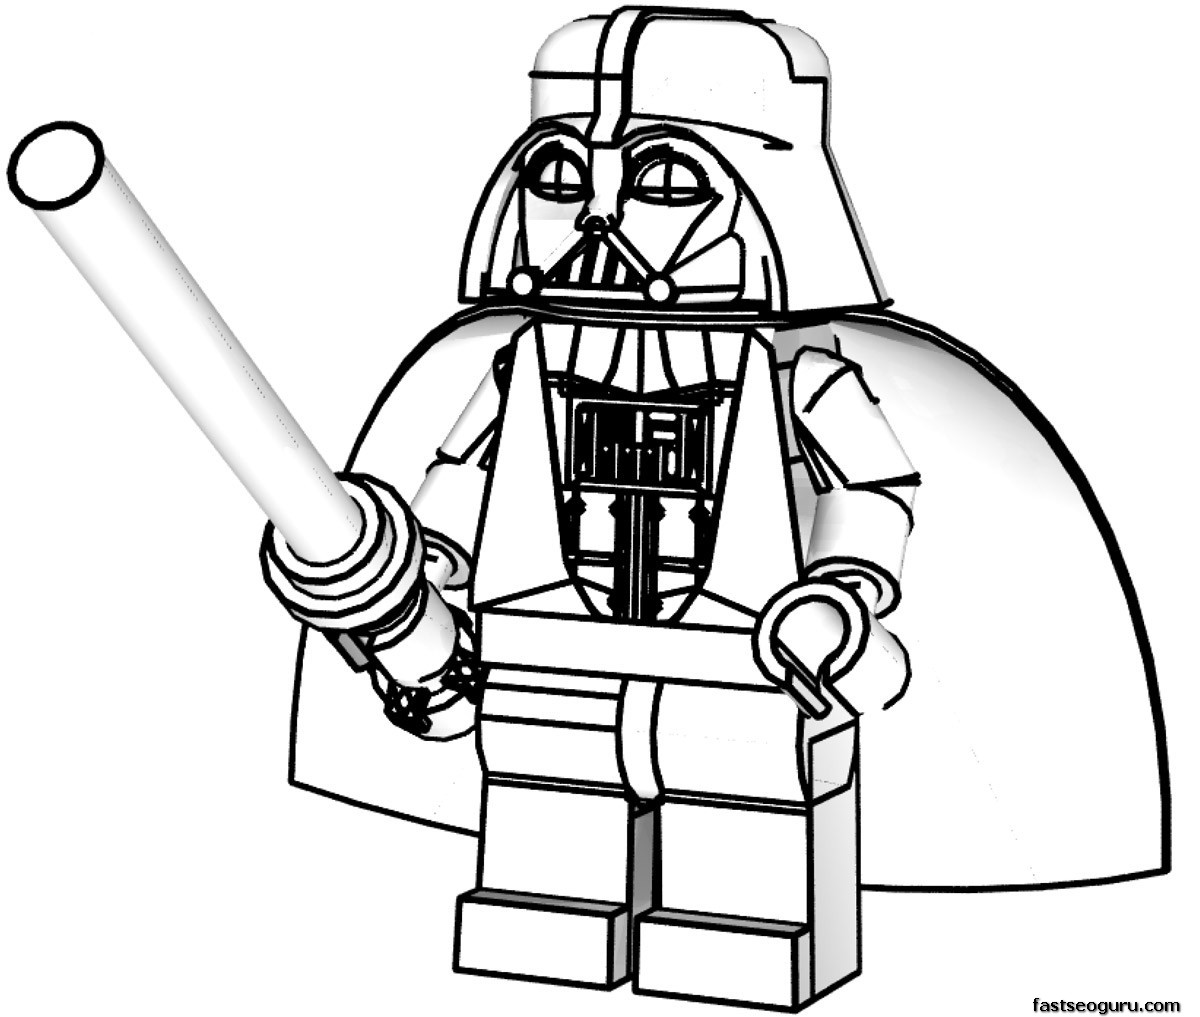 Pix For > Darth Vader Lego Clip Art